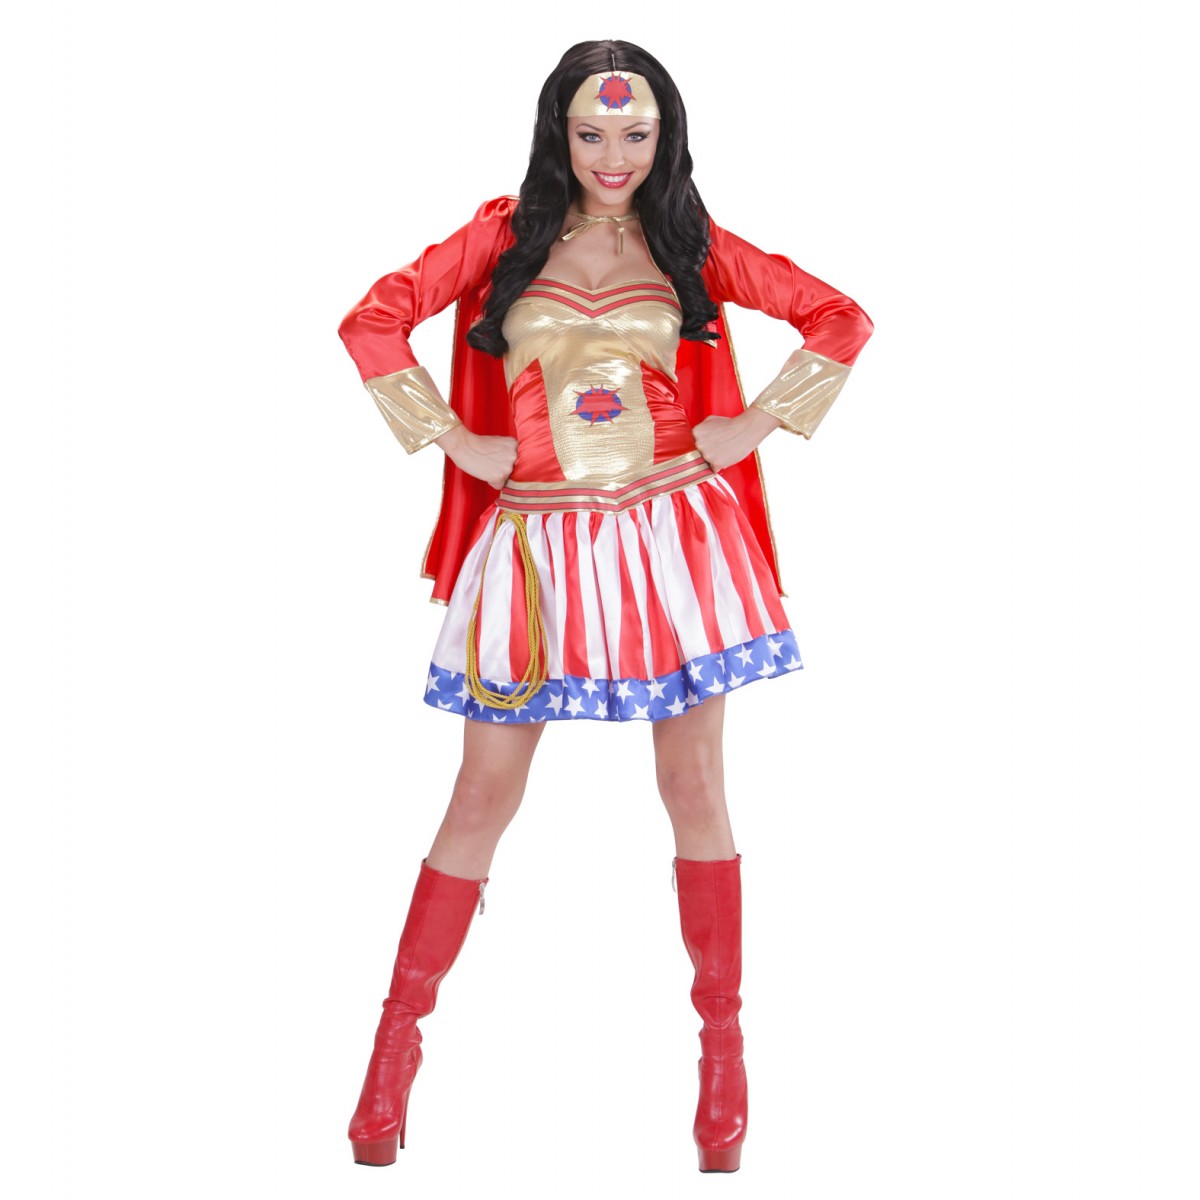 Costume Wonder girl